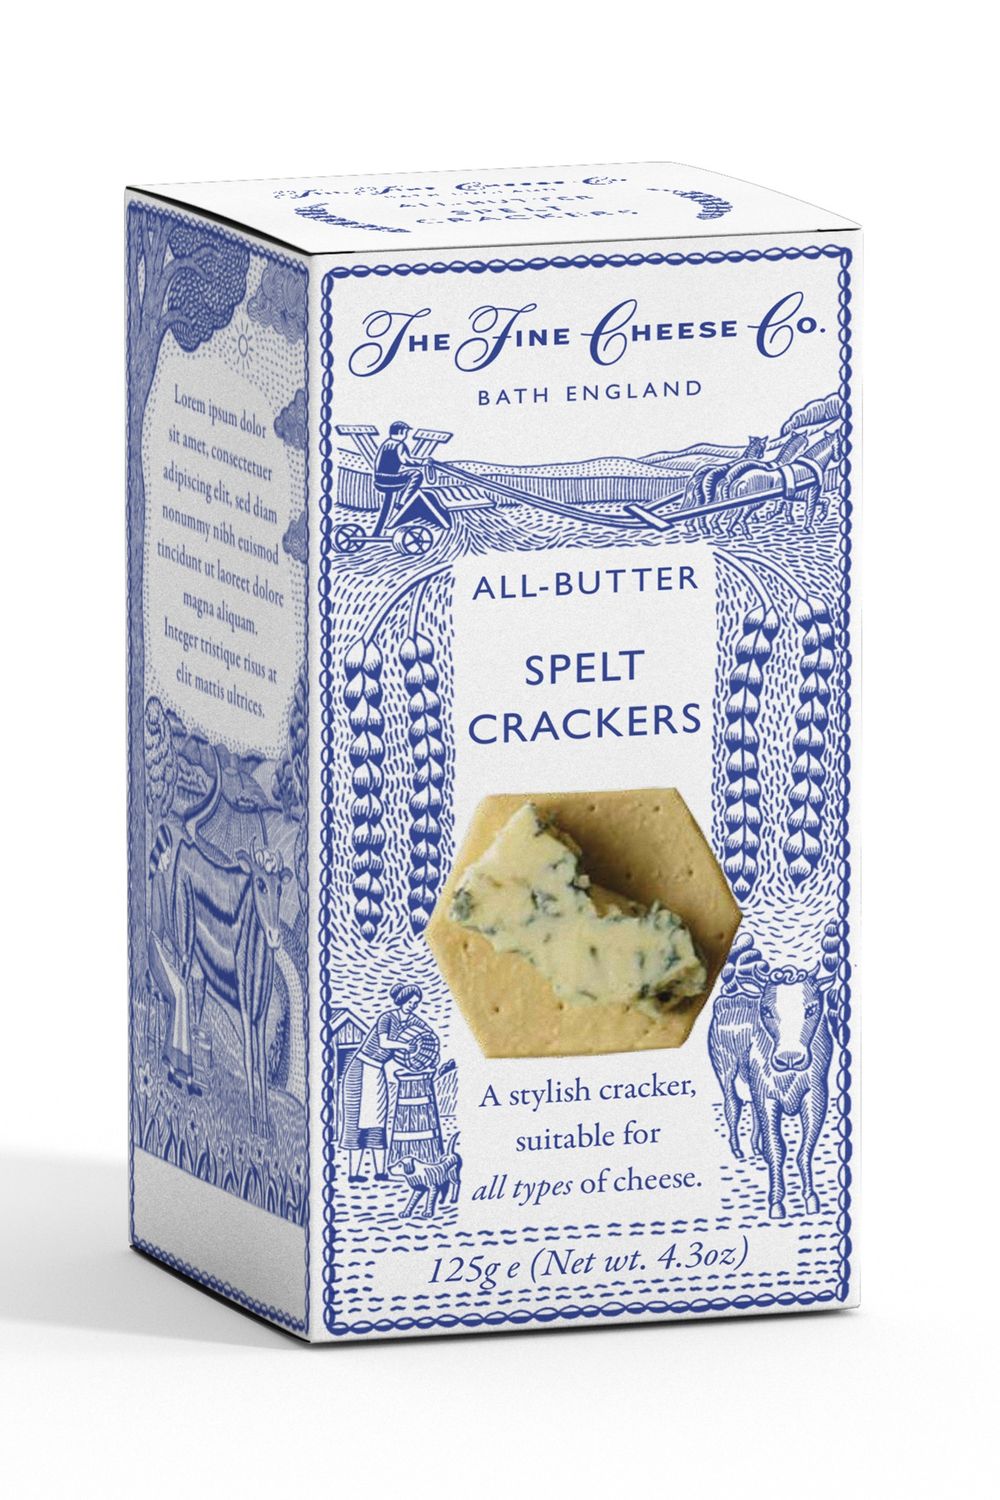 All-Butter Spelt Crackers